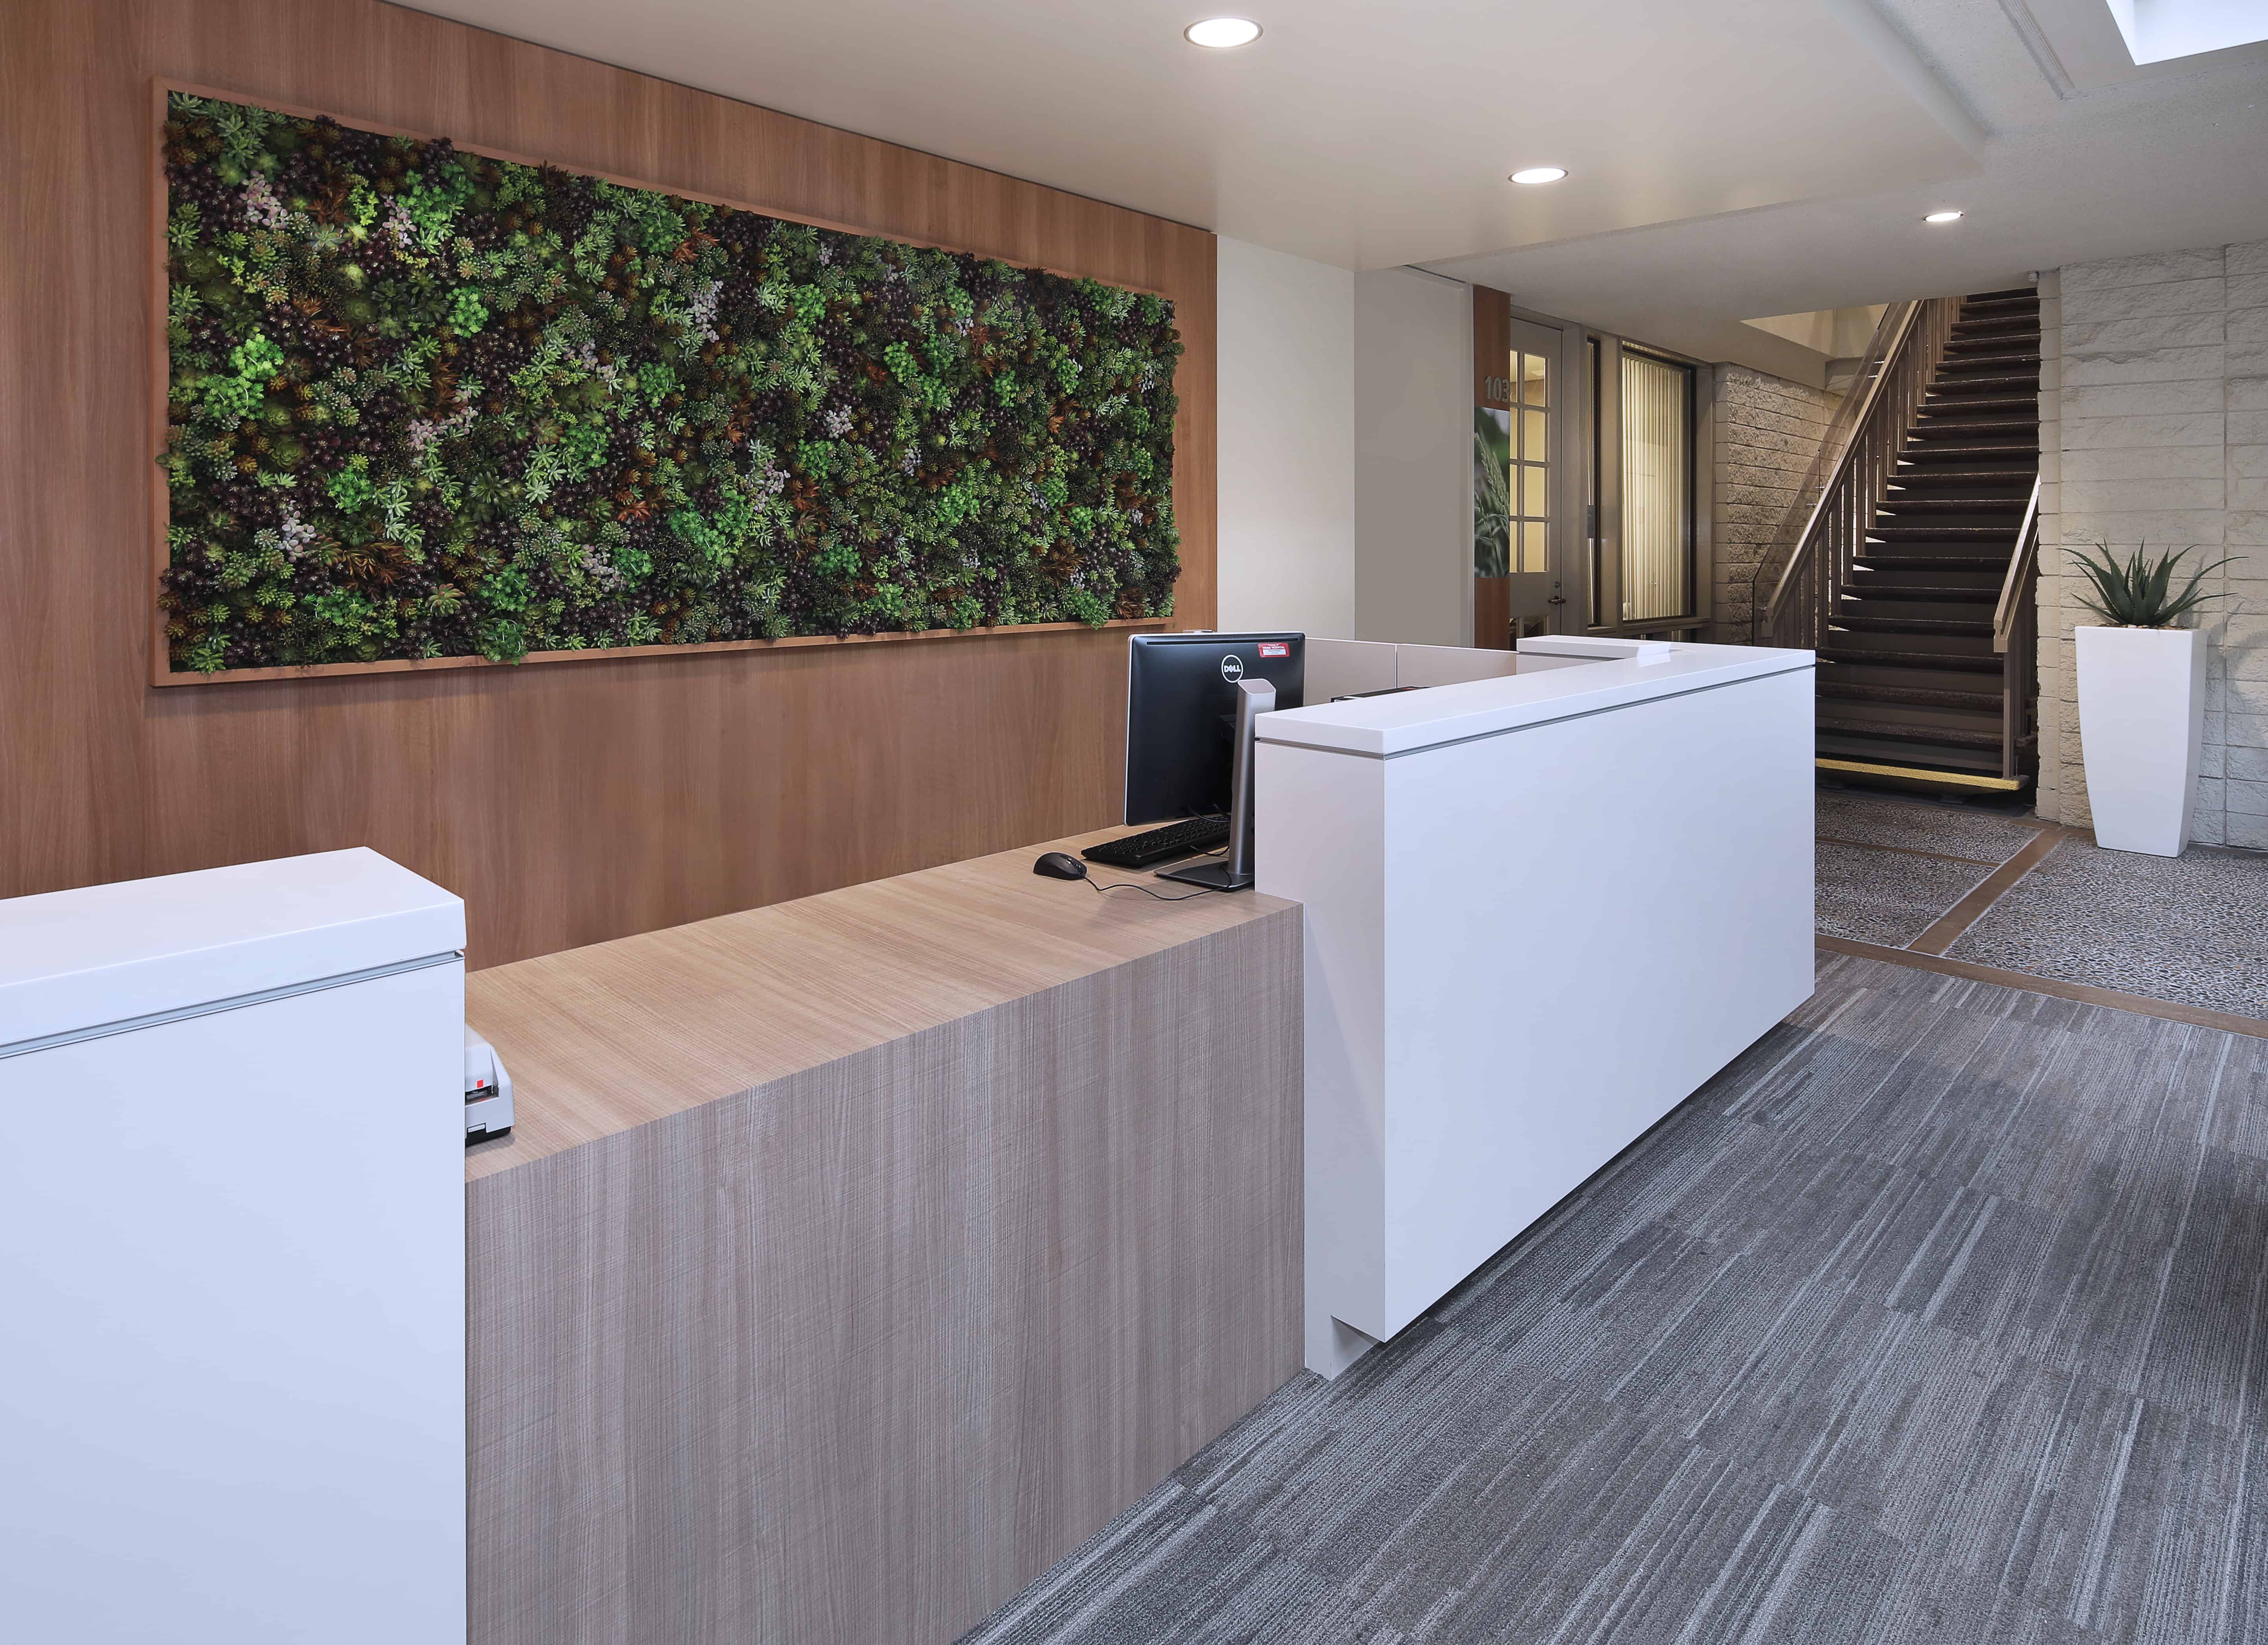 moss sedum wall created for Medical Building Lobby